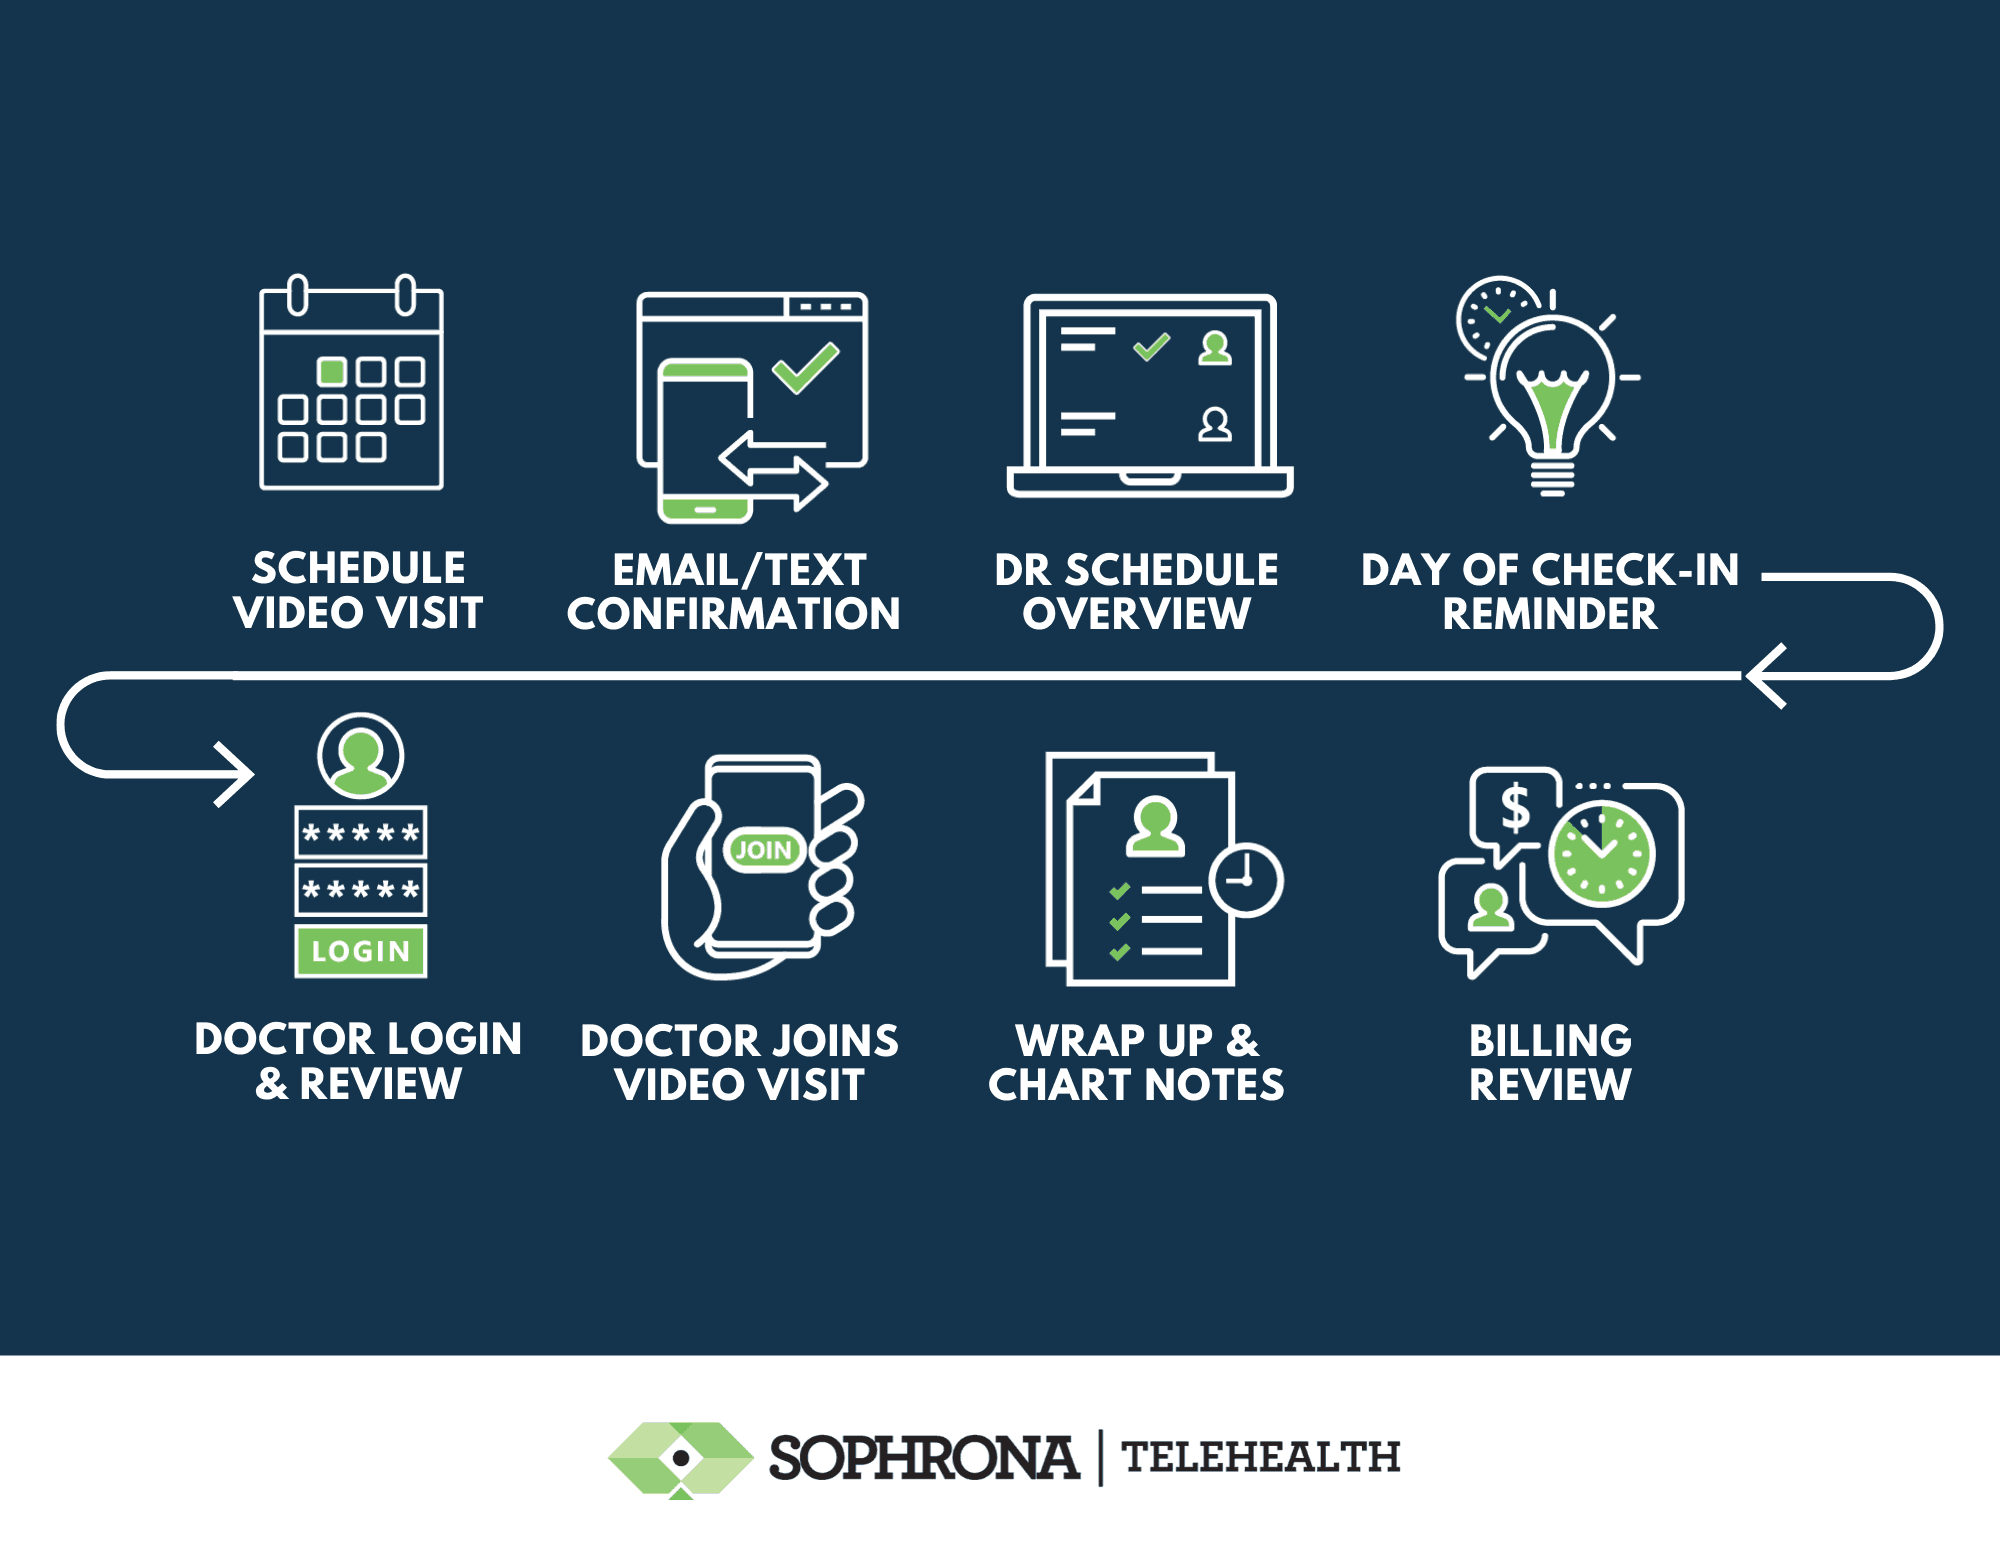 Sophrona | Telehealth Infographic, Video Visit Workflow